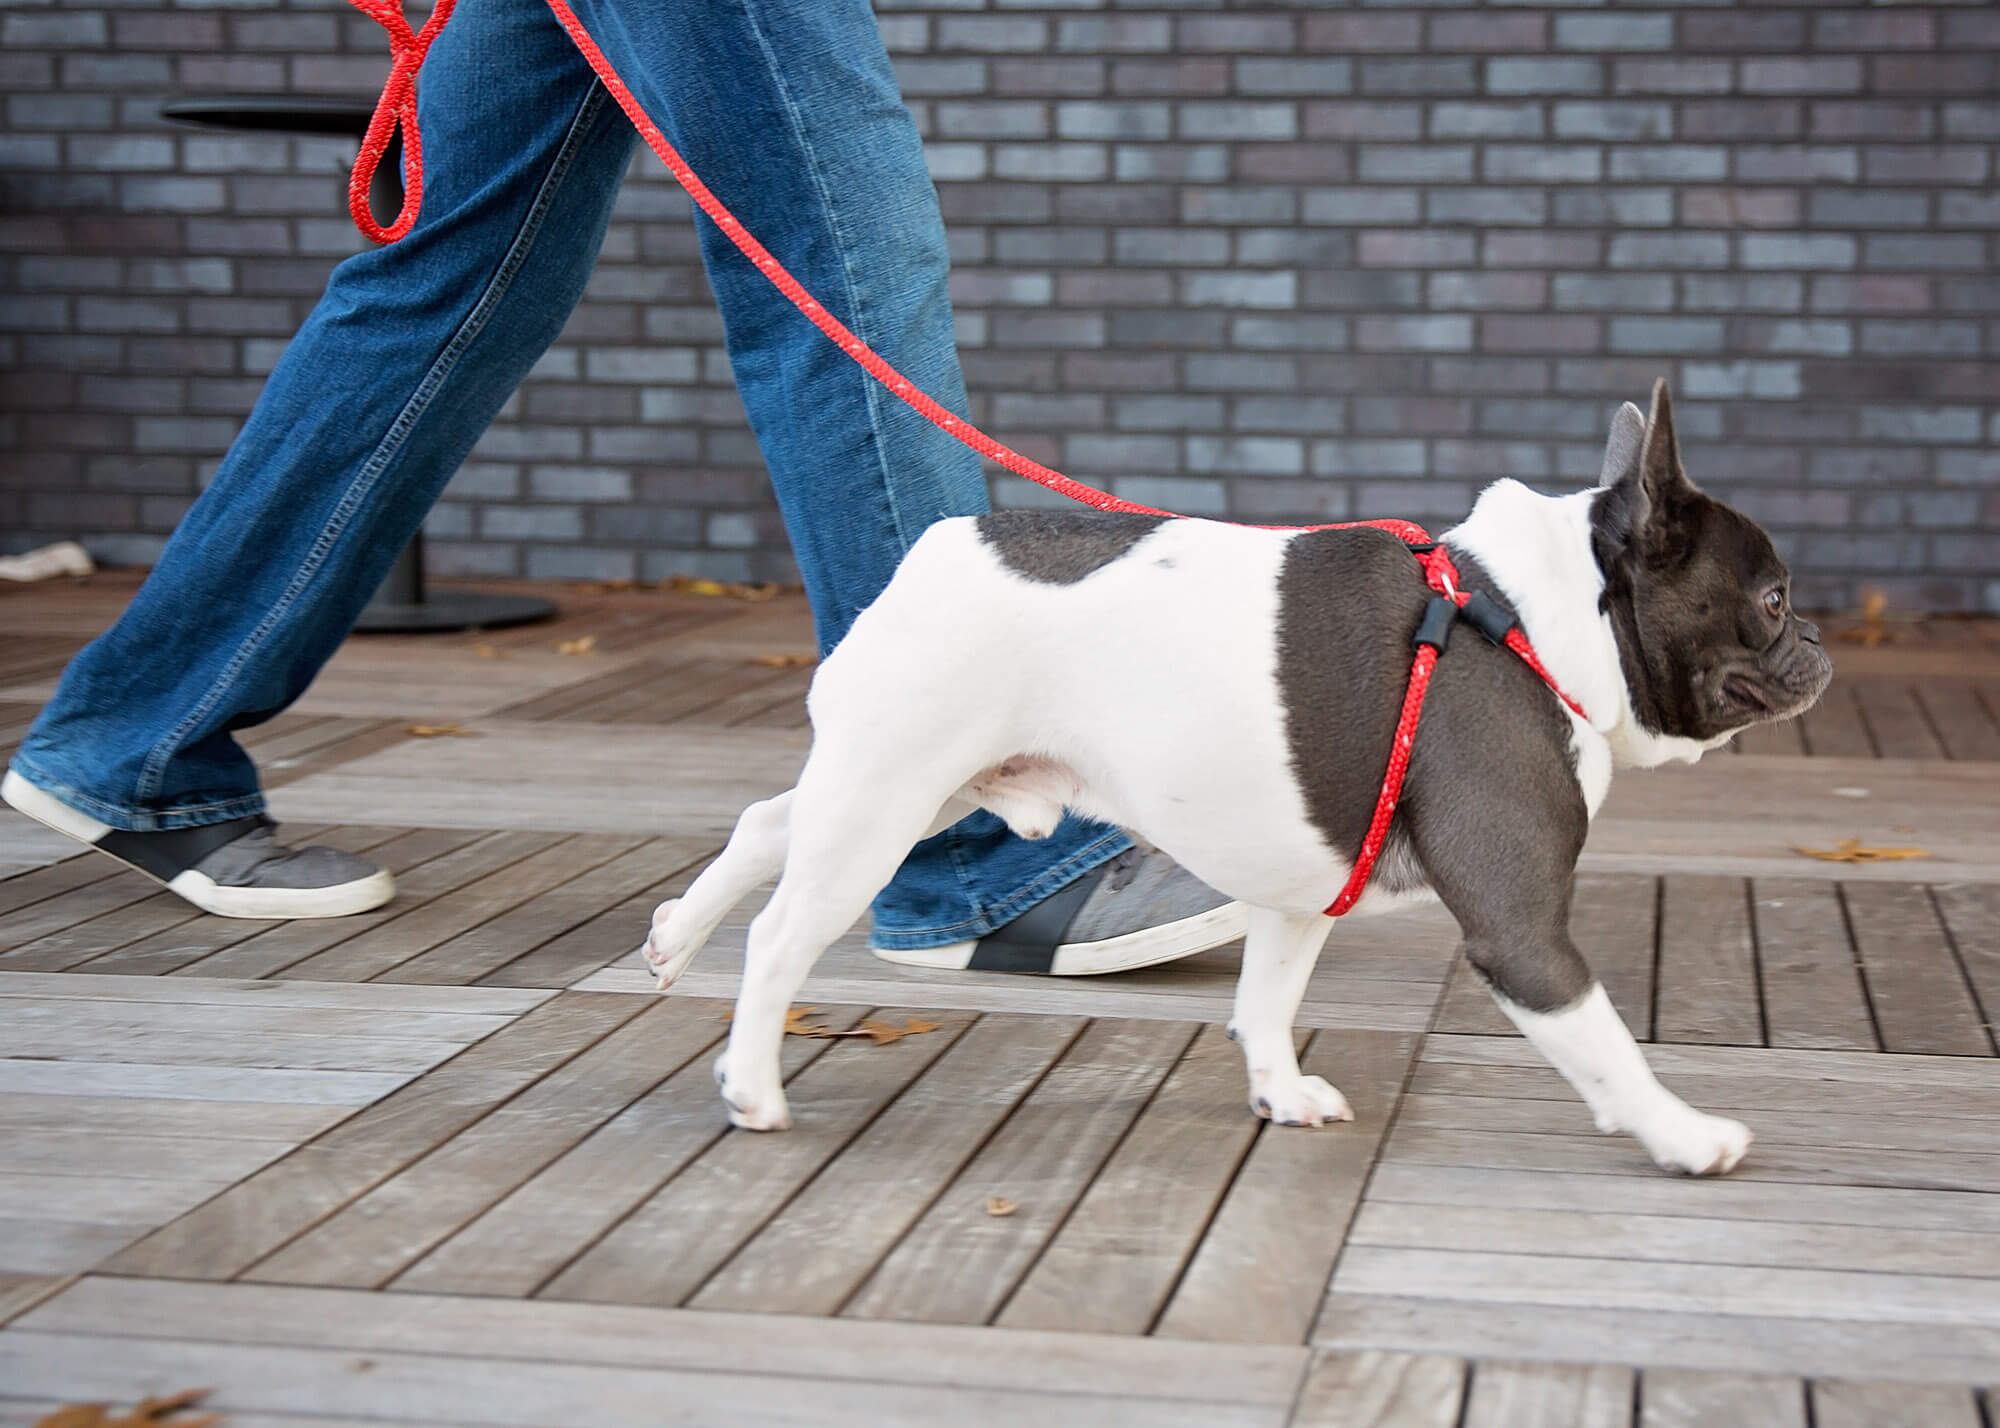 Harness lead red dog harness leash on dog